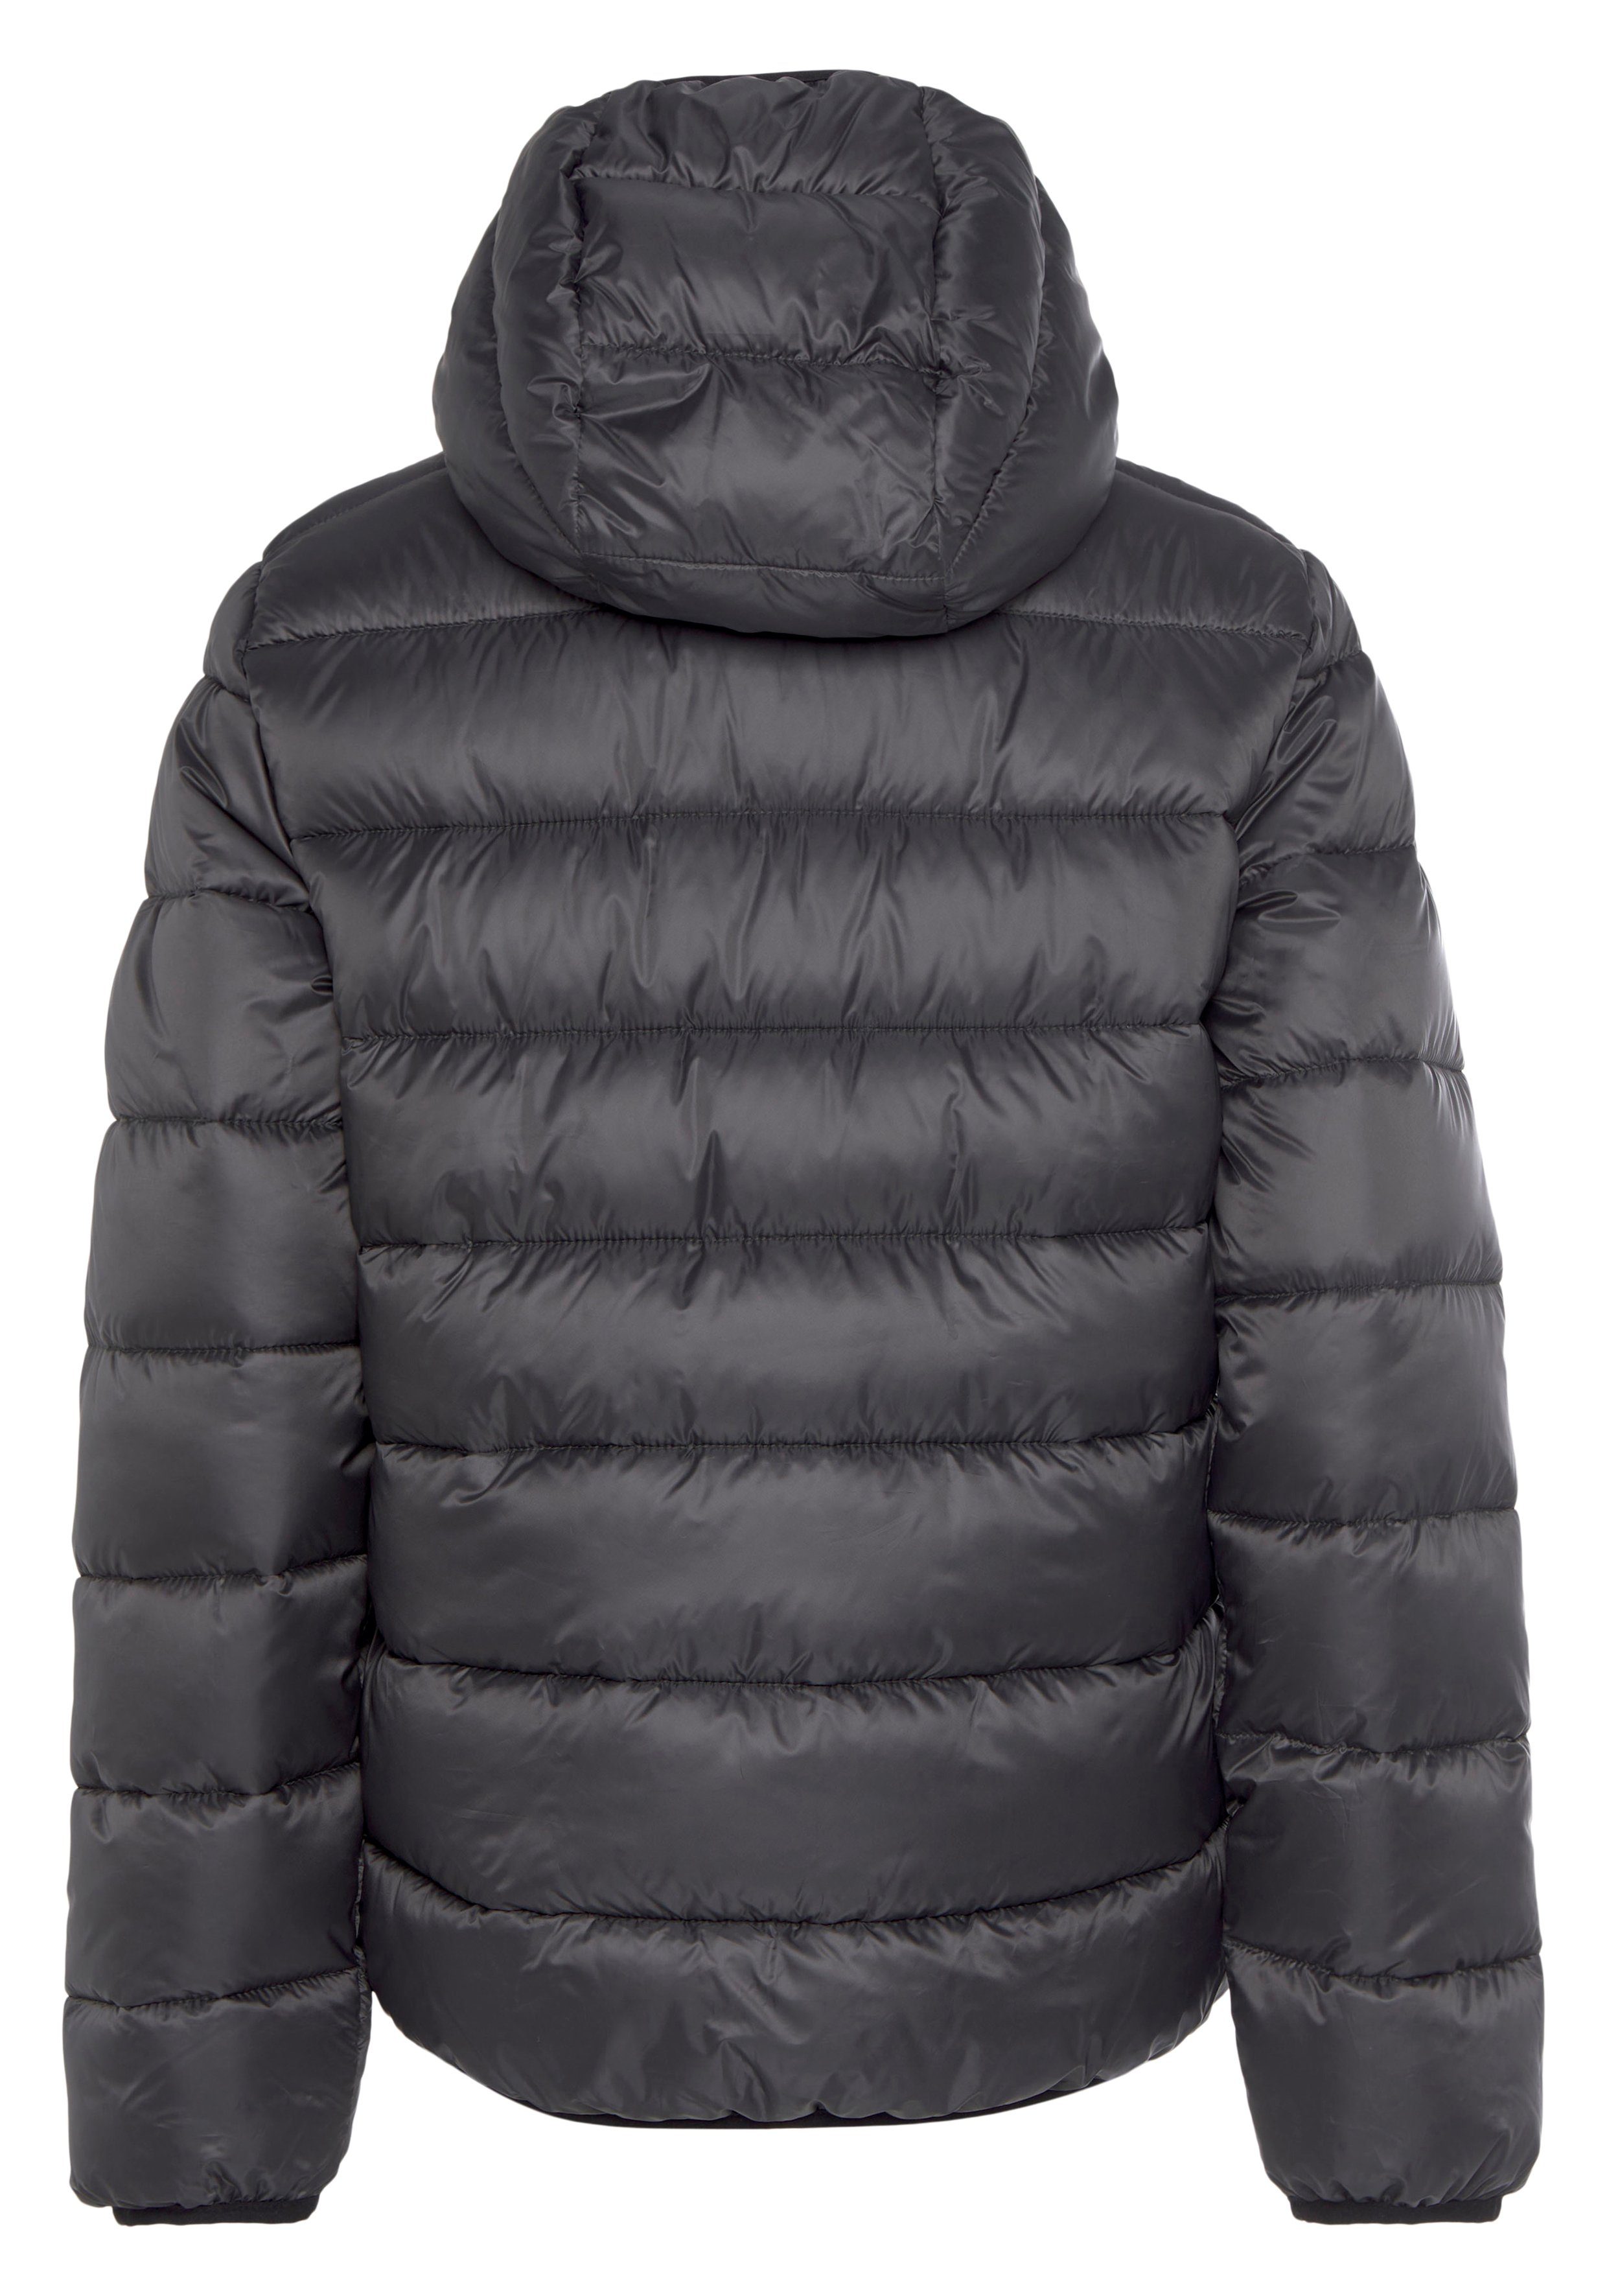 Champion Jacket Steppjacke Hooded für Kinder - grau Outdoor